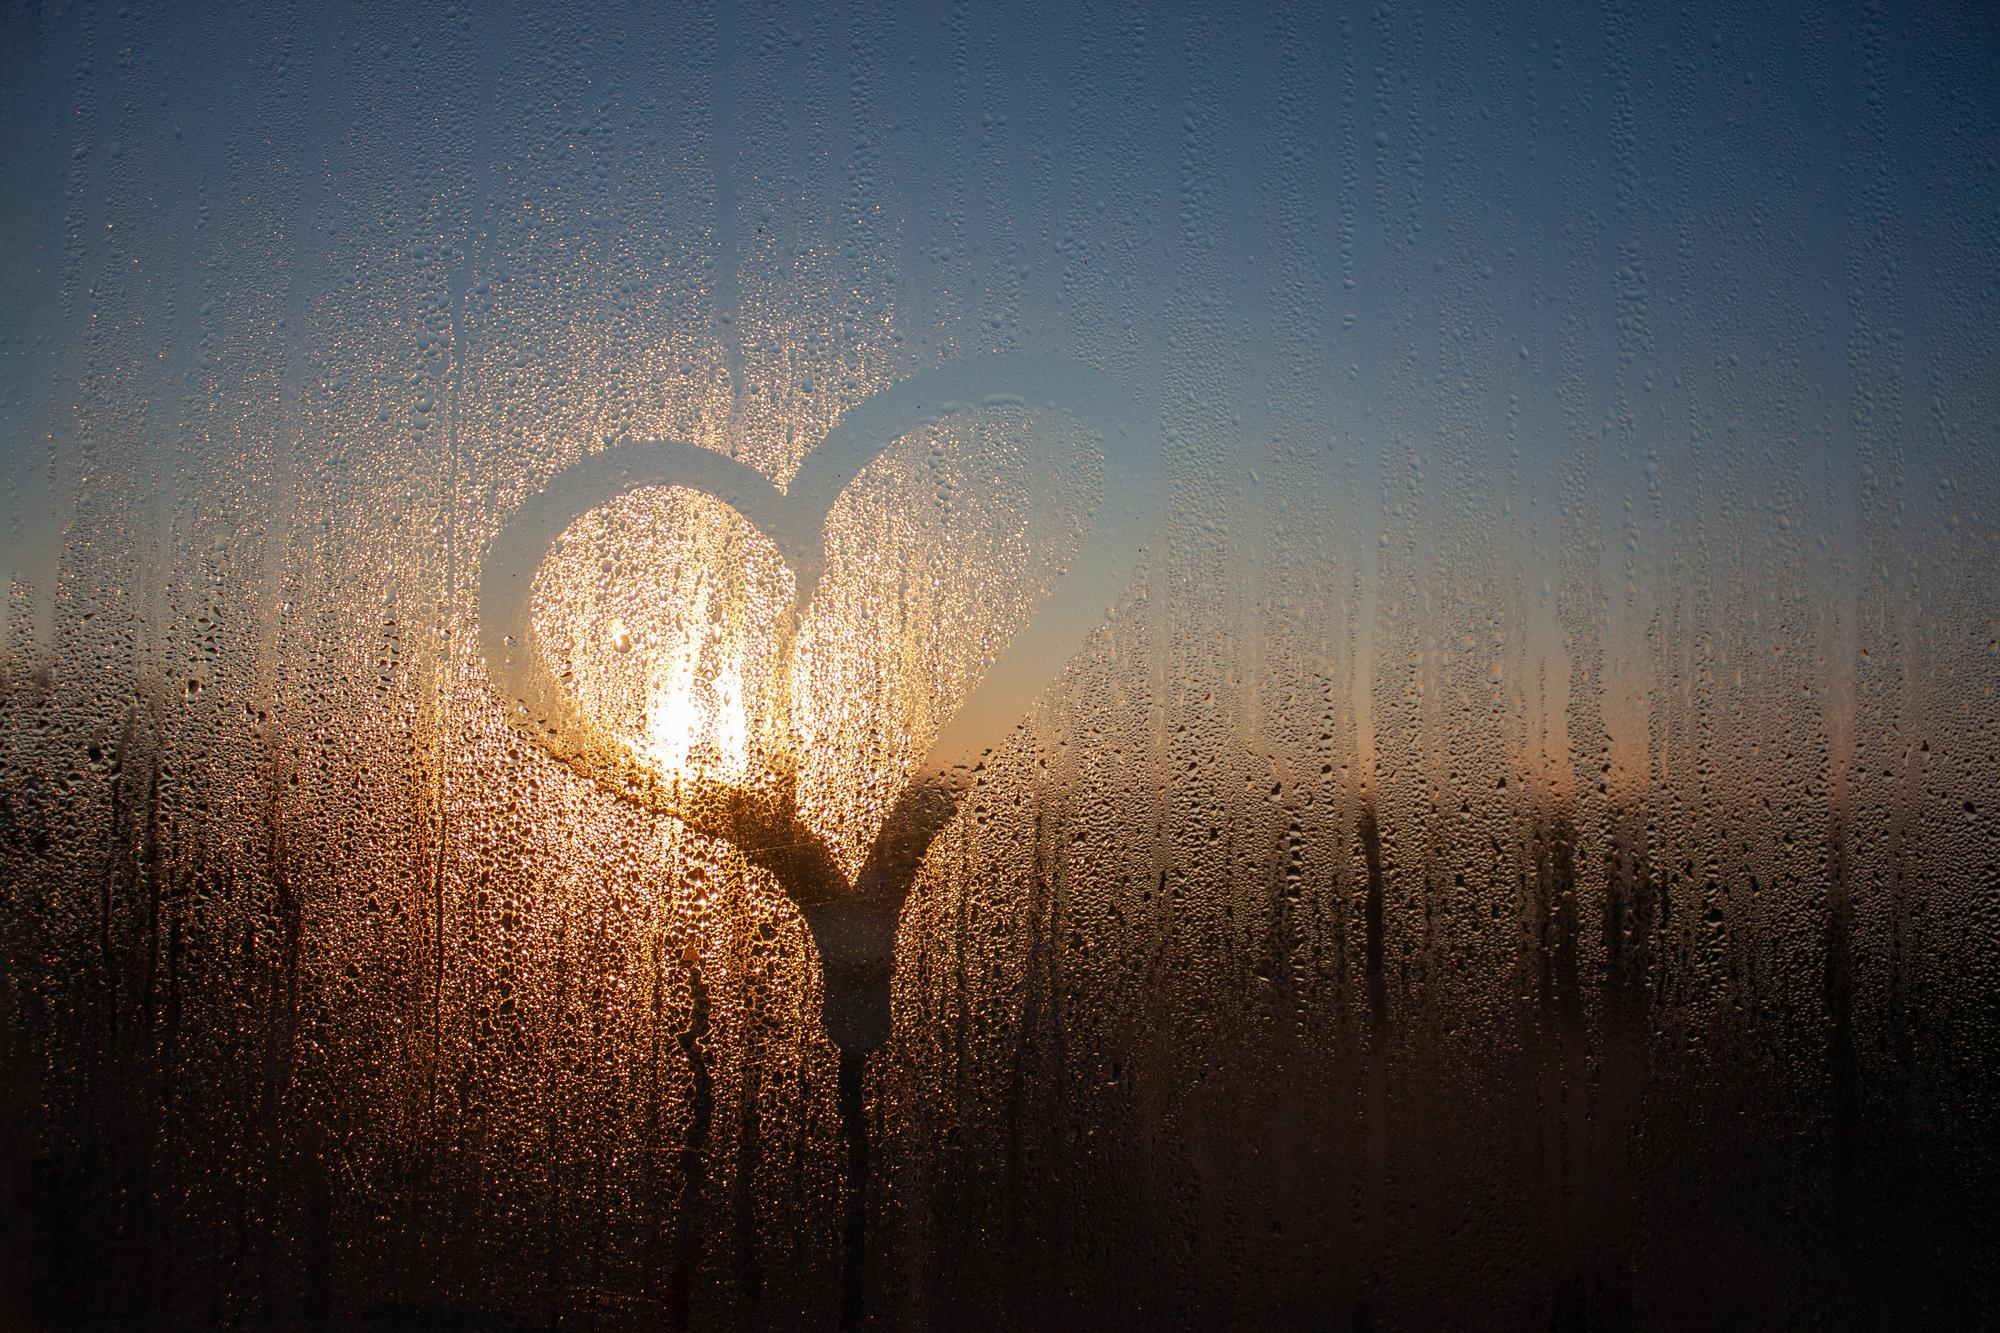 image of a heart shape drawn on a misty window pane